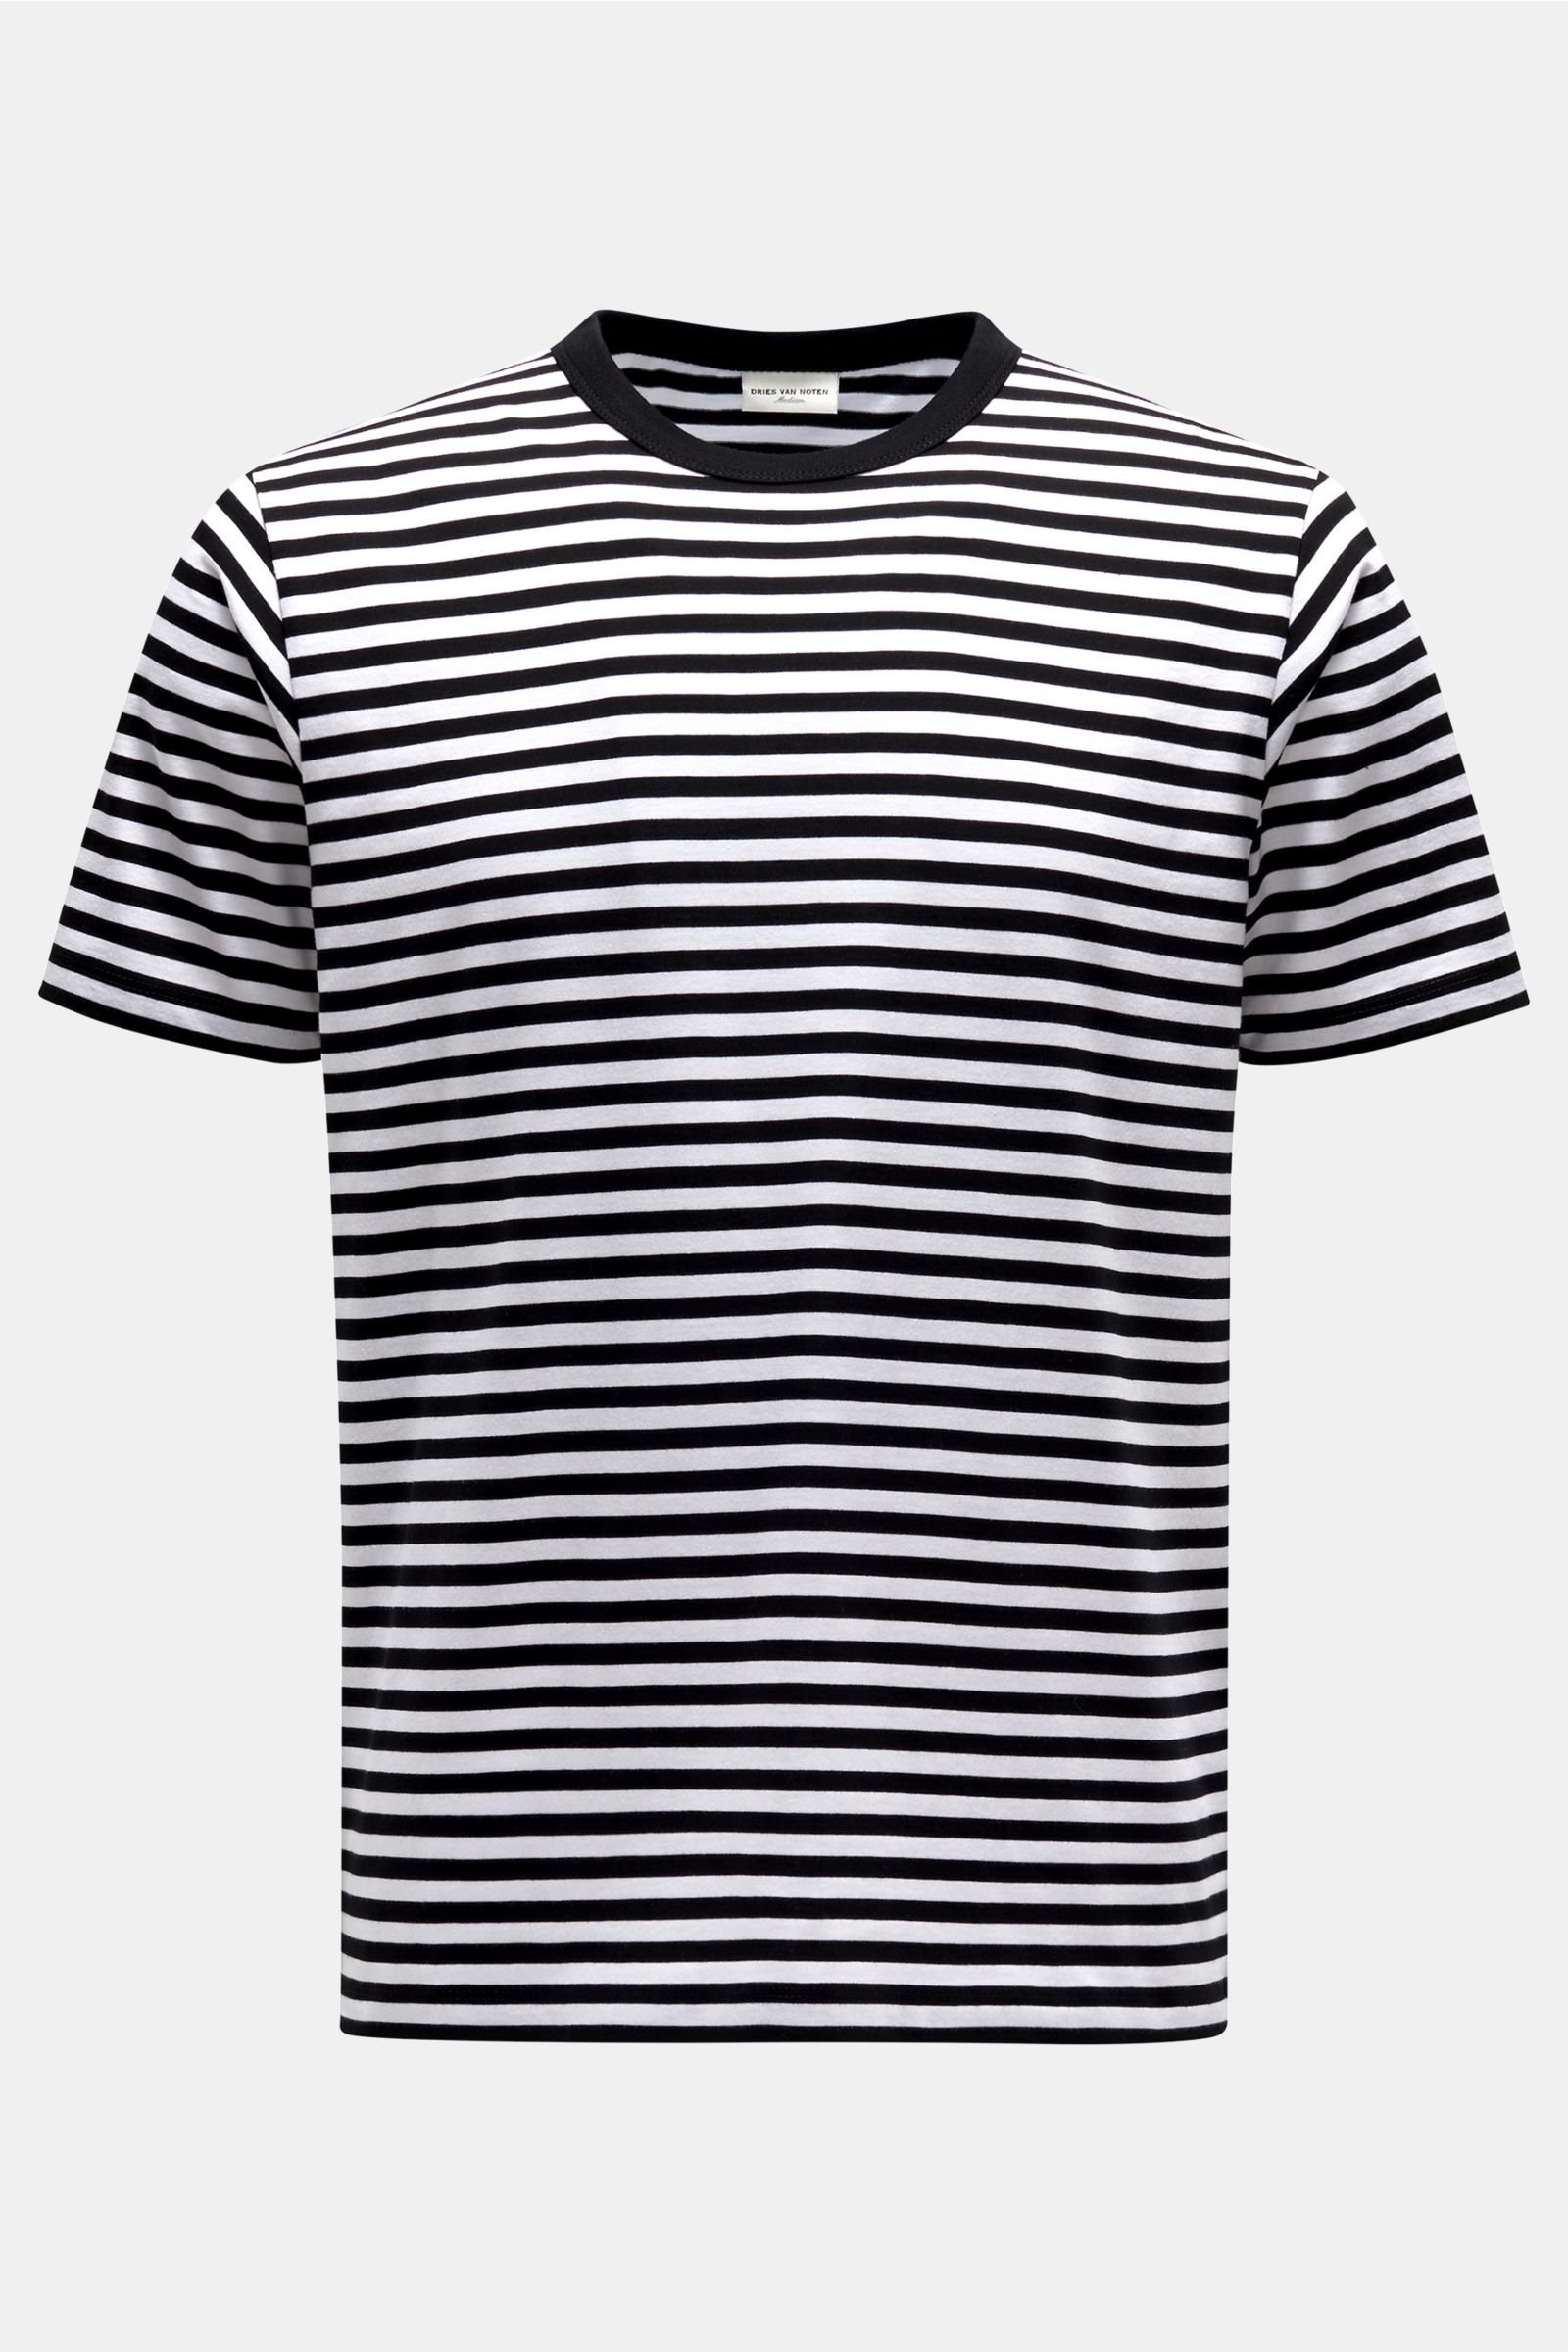 Crew neck T-shirt black/white striped